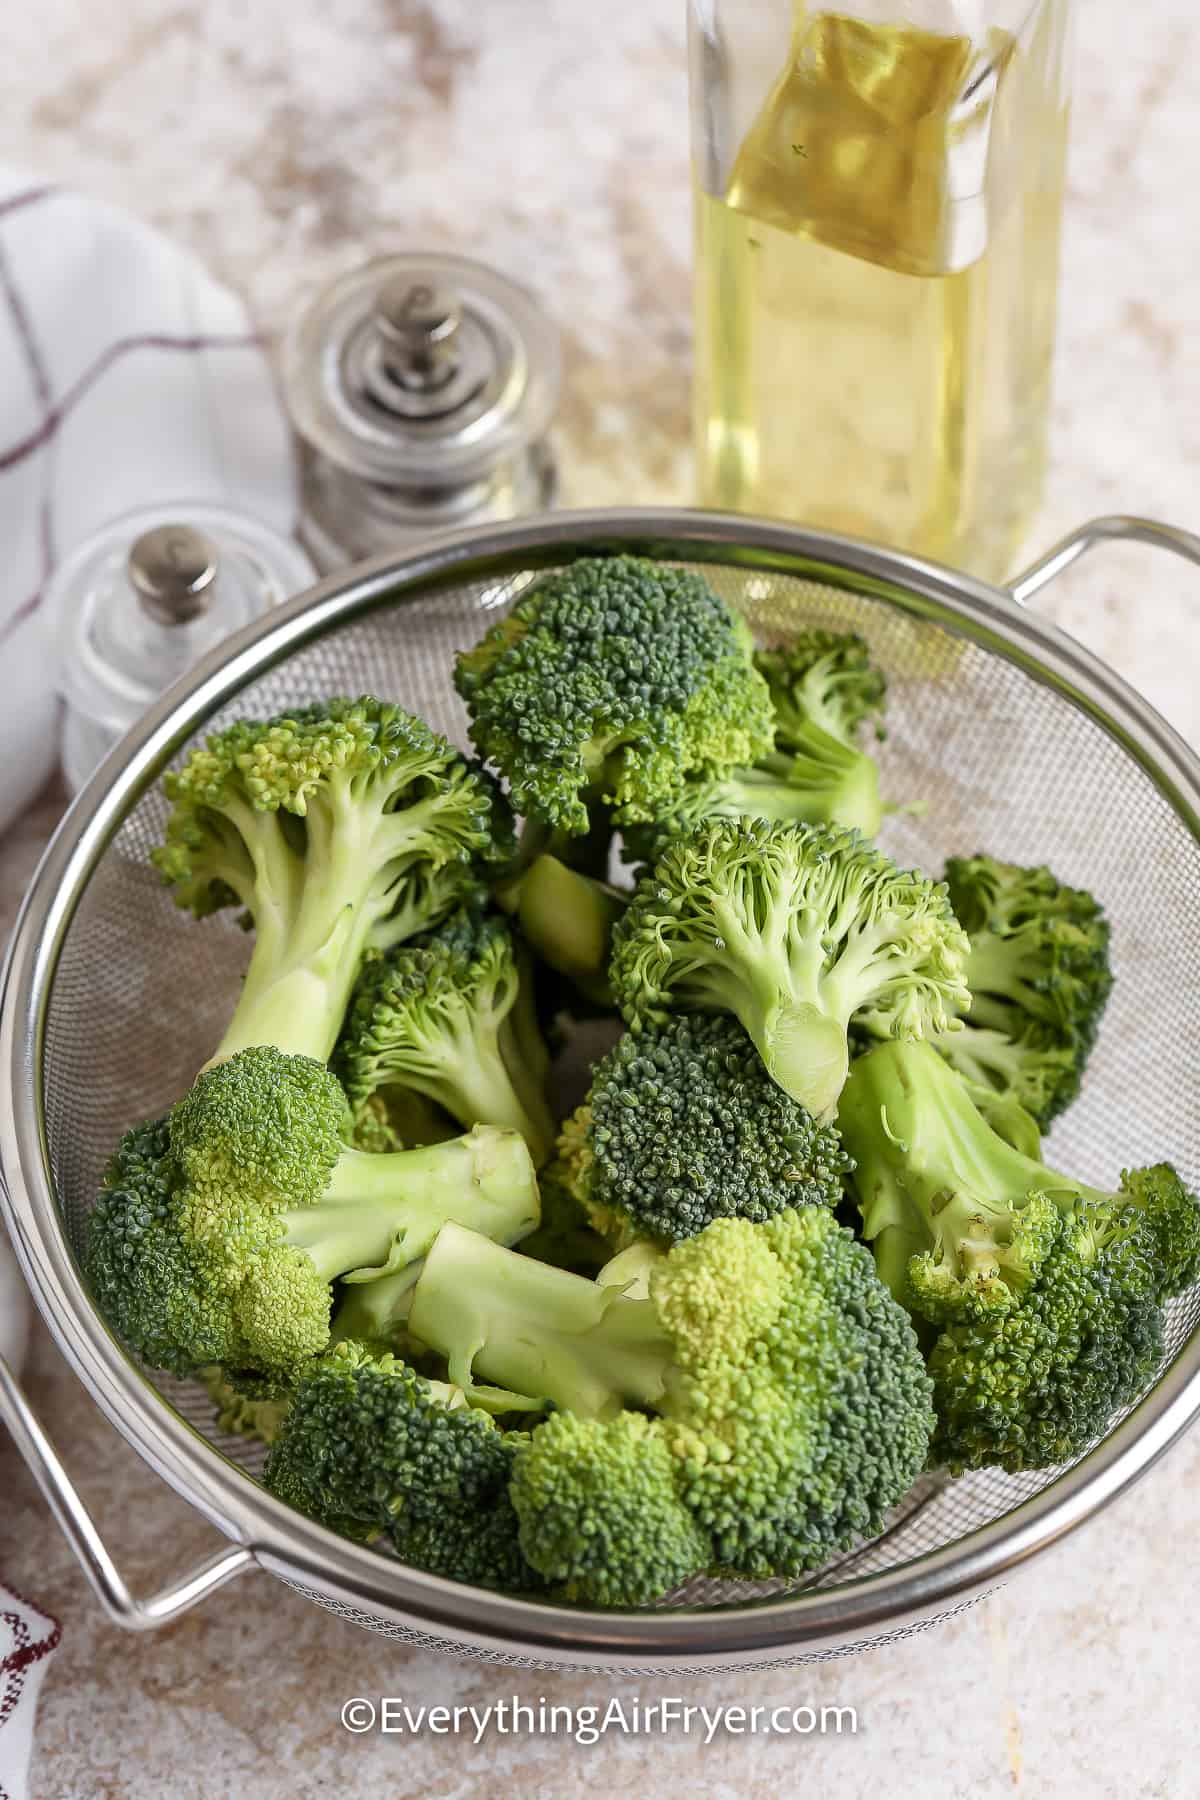 Ingredients to make Air Fryer Broccoli